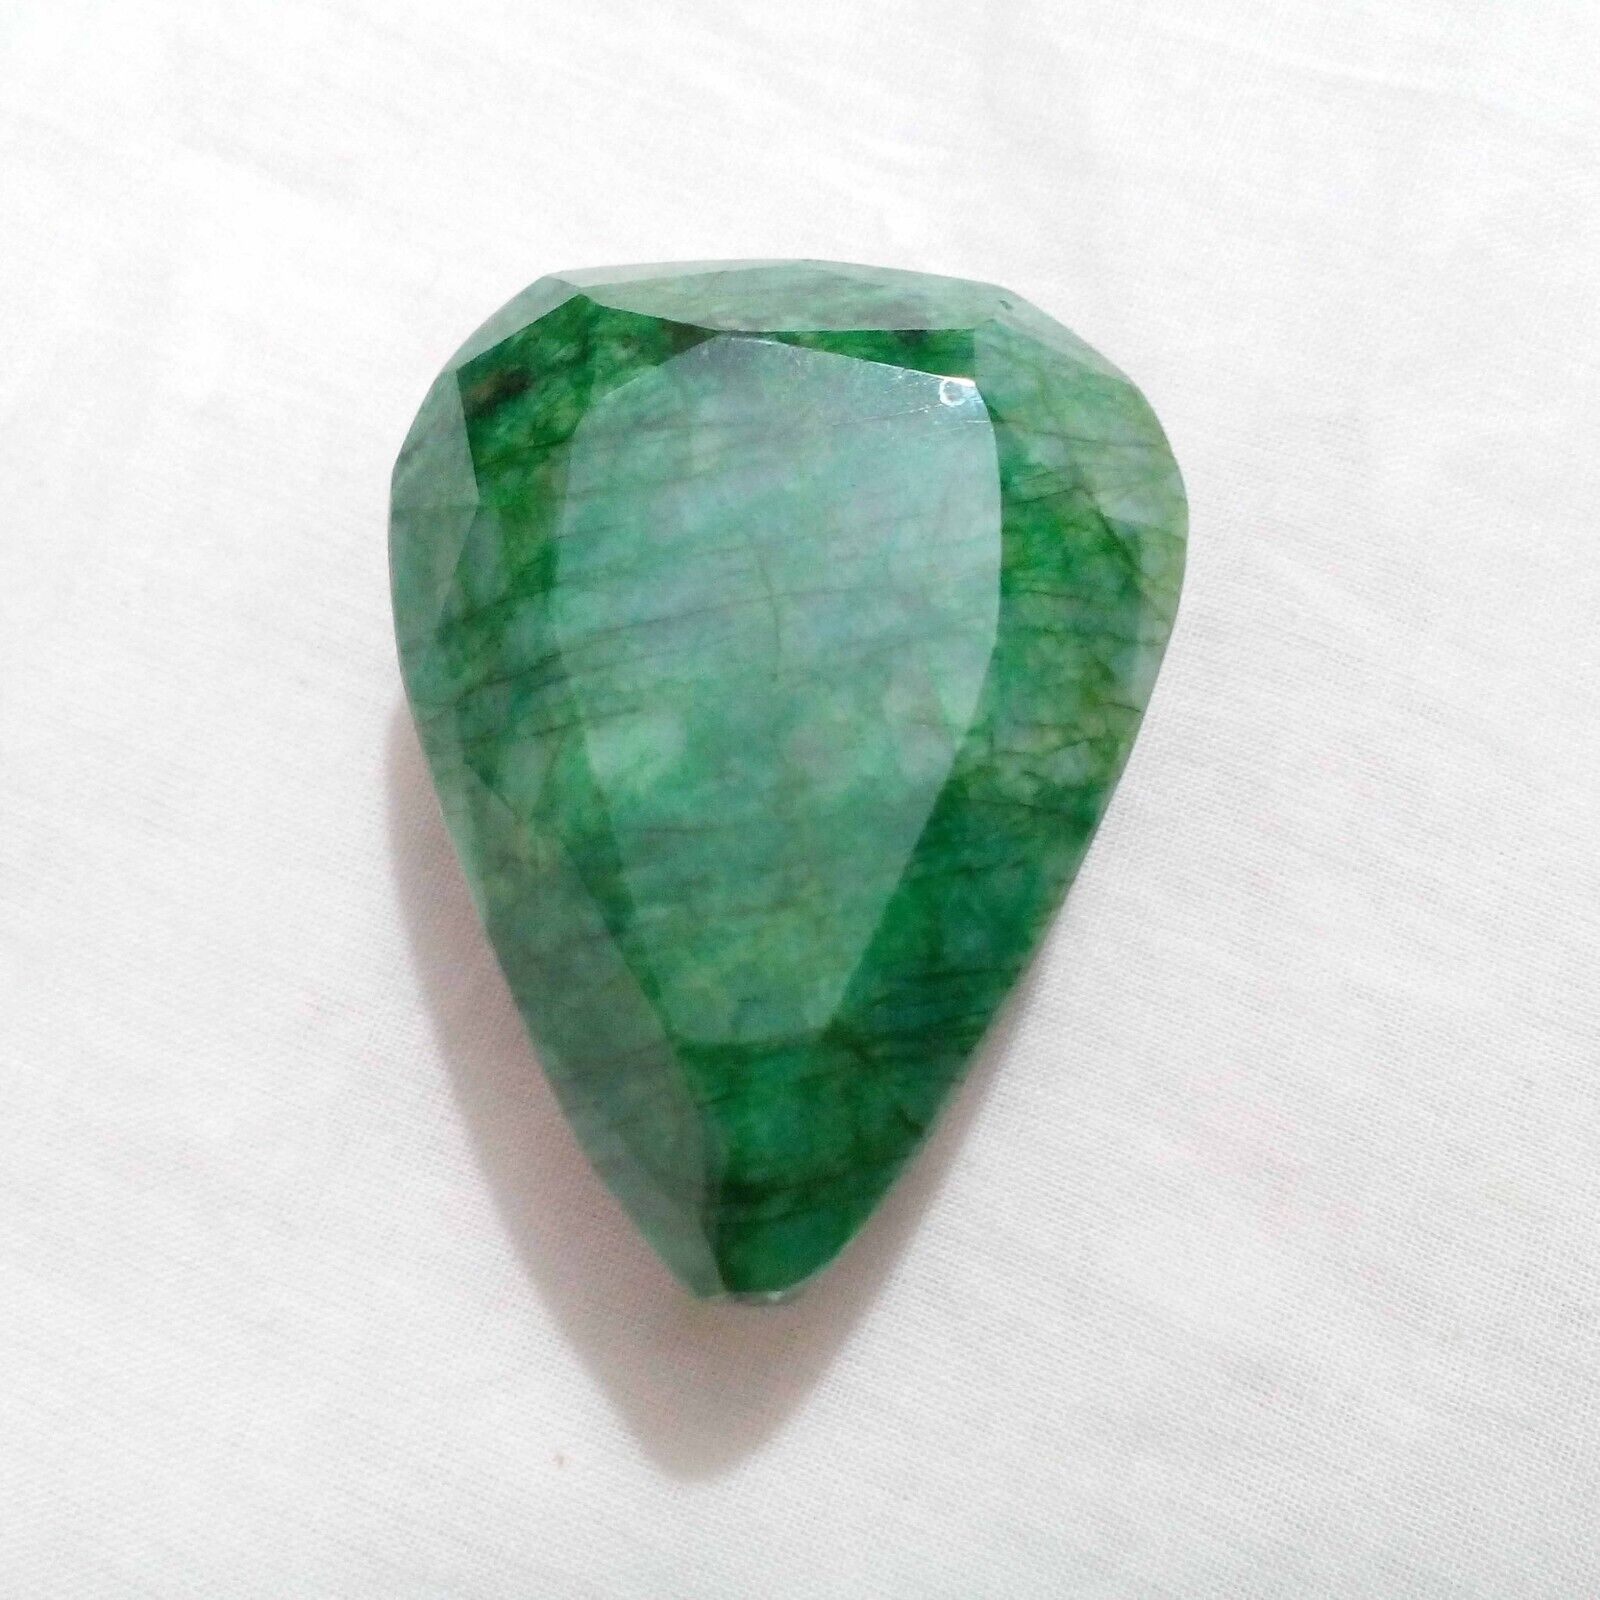 Unique Brazilian Green Emerald Pear Shape 319 Crt Faceted Loose Gemstone